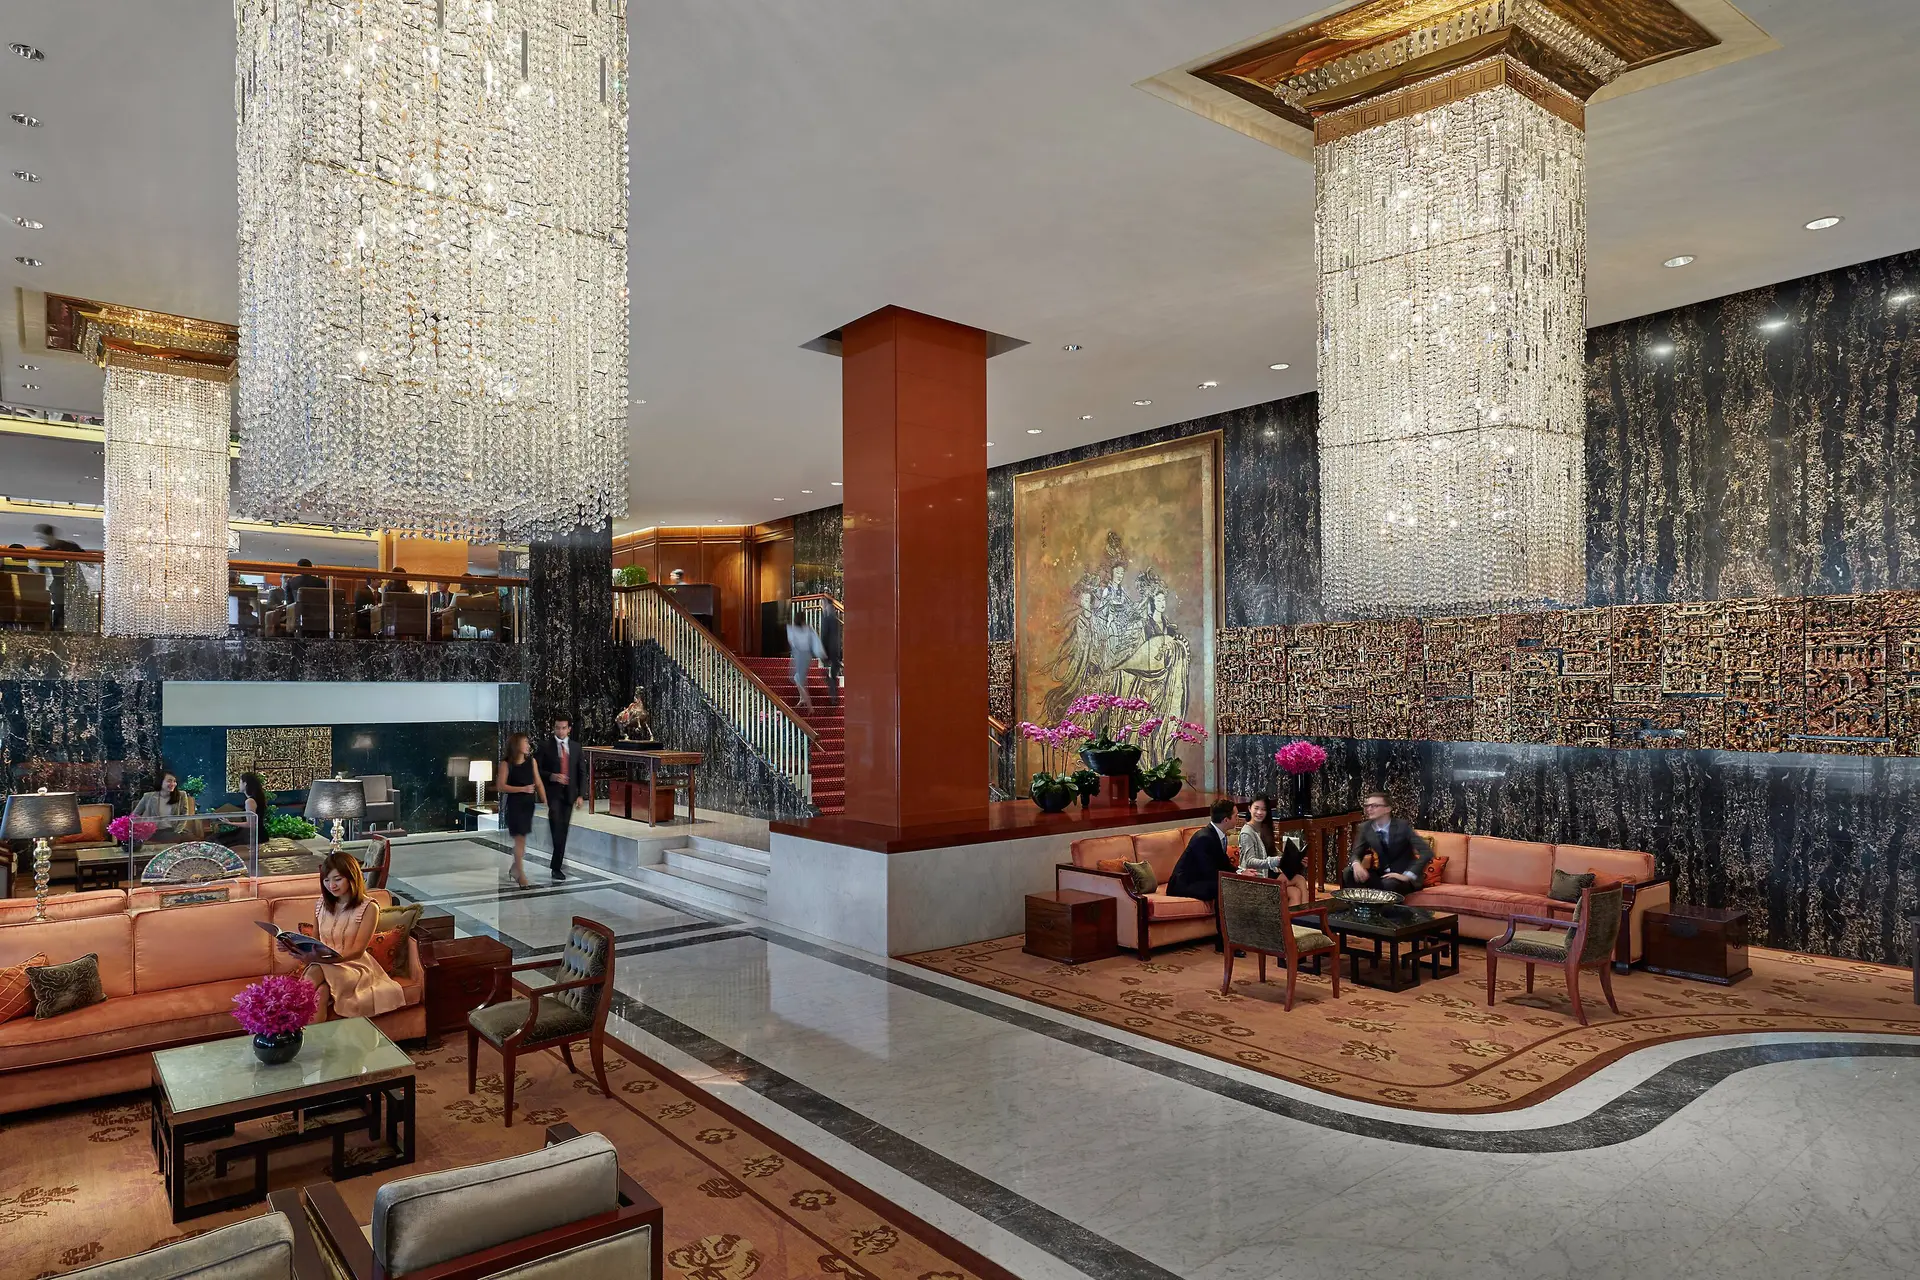 Hotel review Style' - Mandarin Oriental Hong Kong - 0